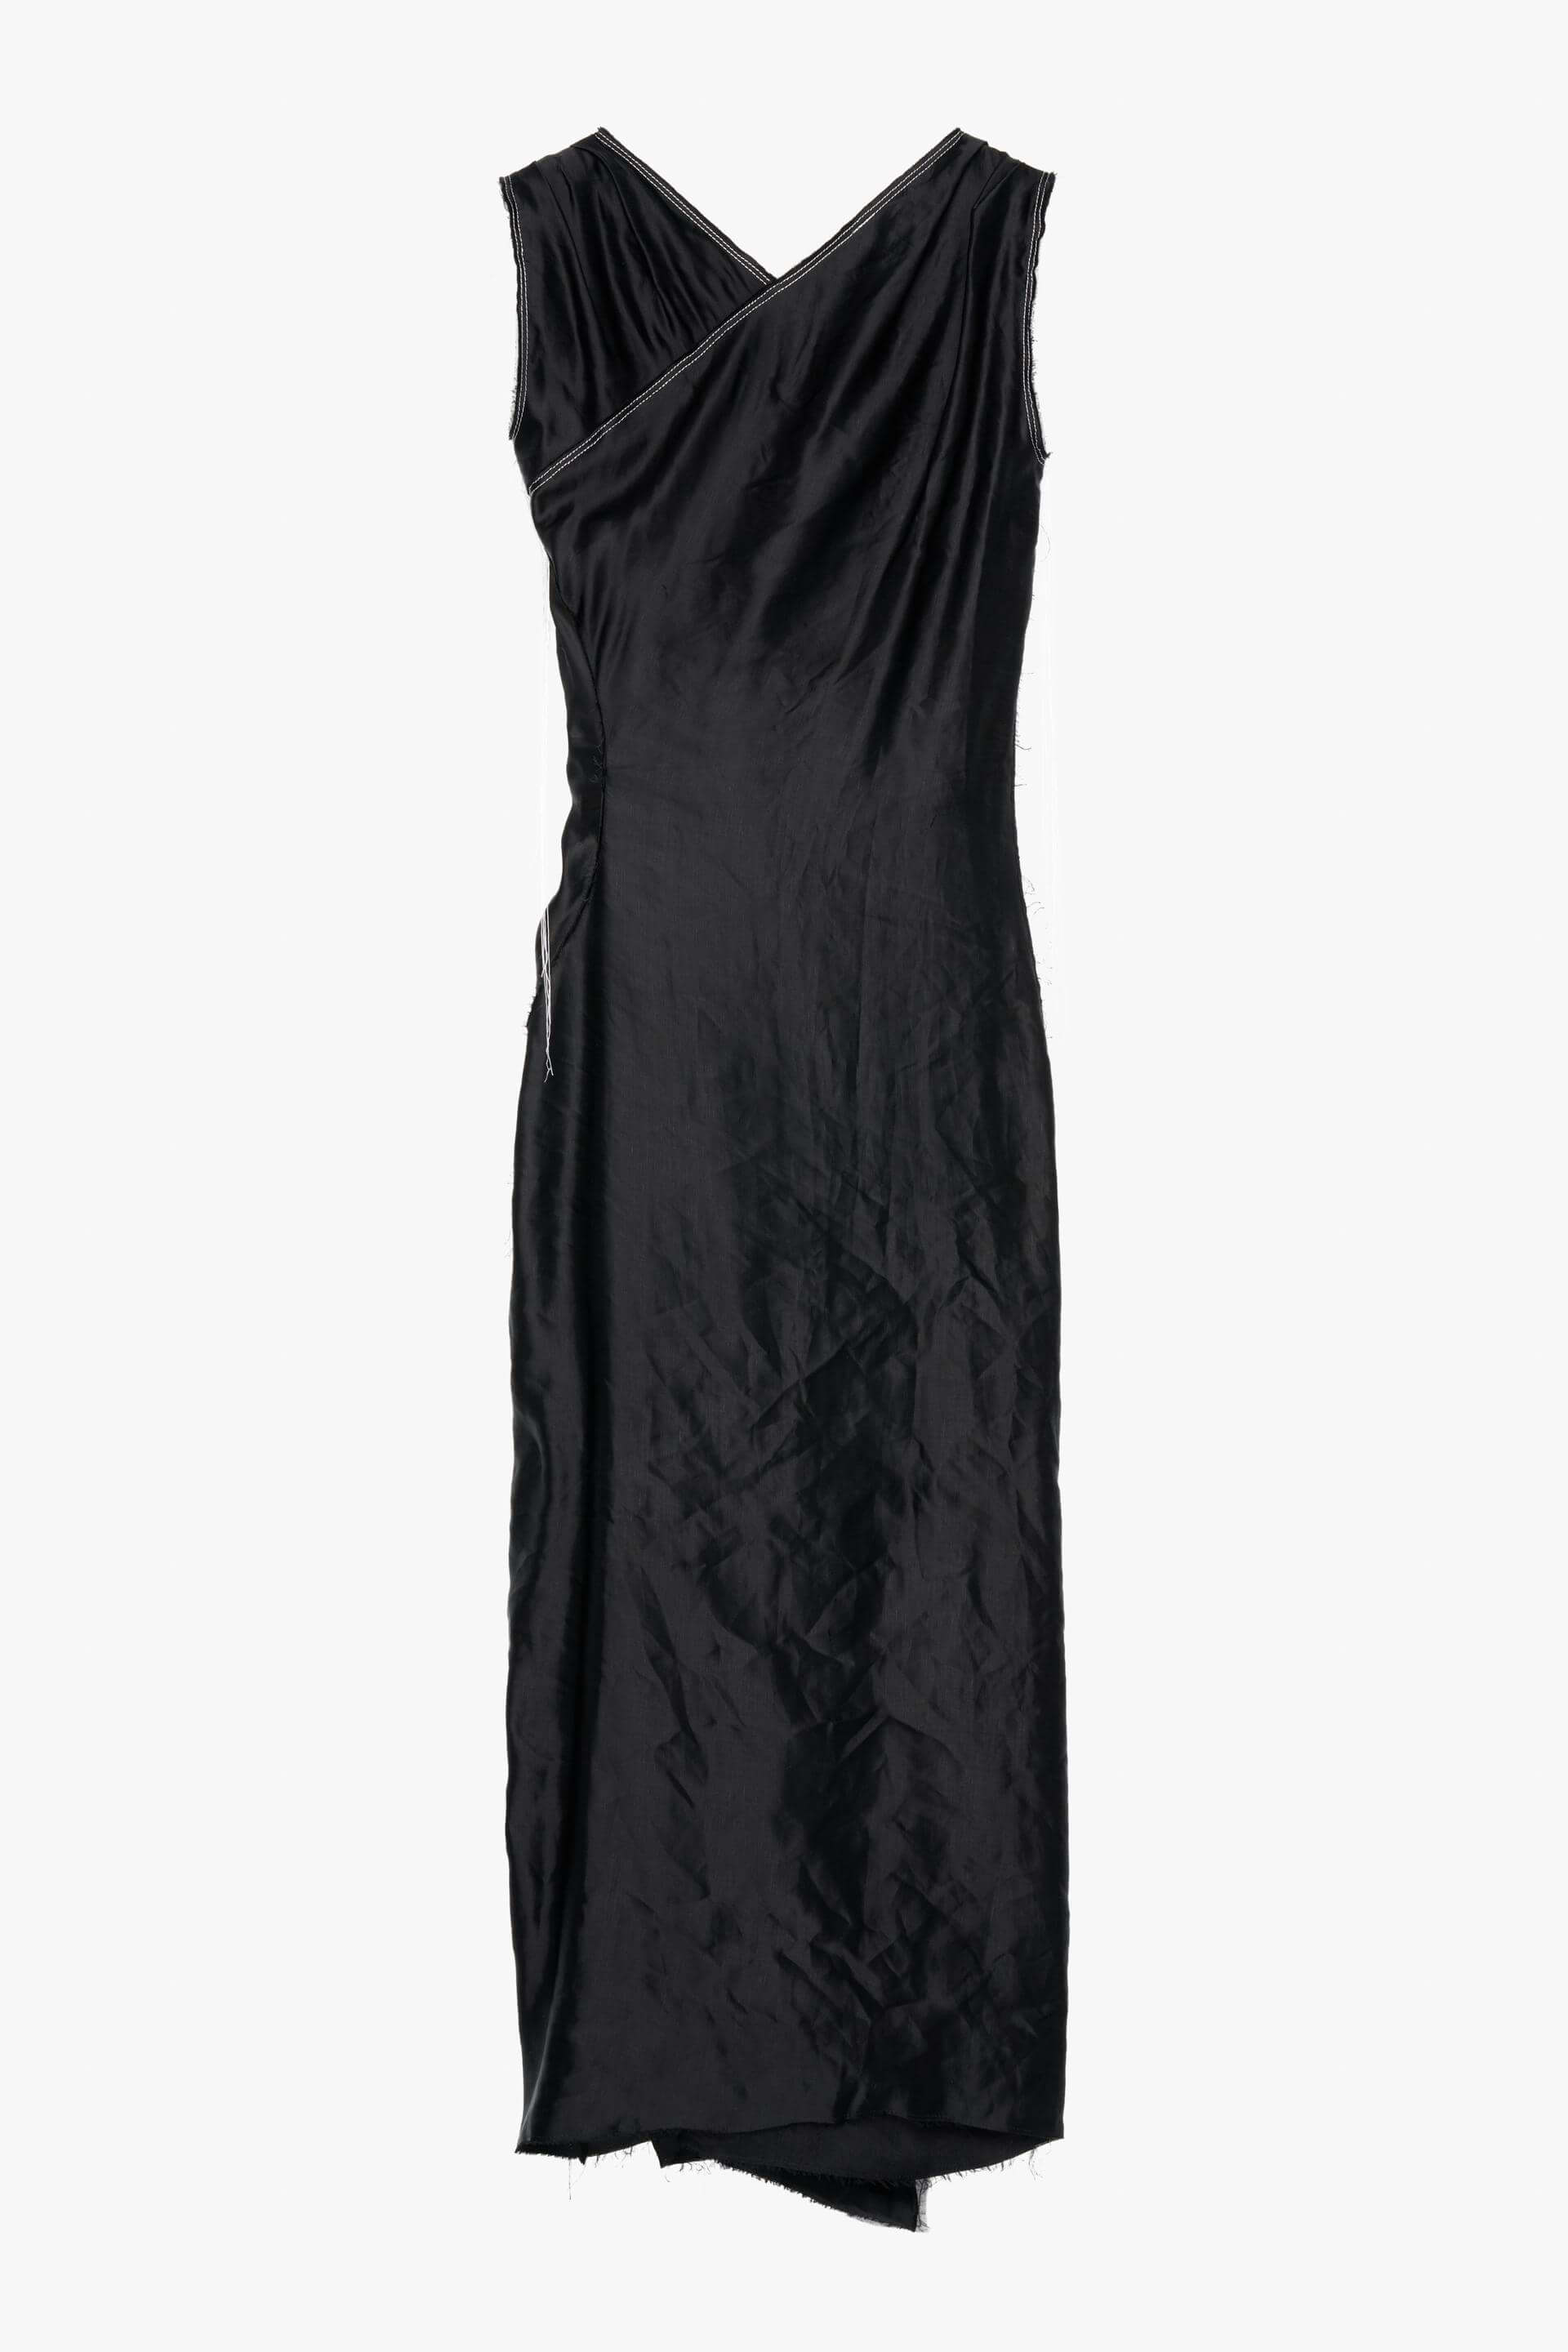 цена Платье Zara Matching Organza - Limited Edition, черный